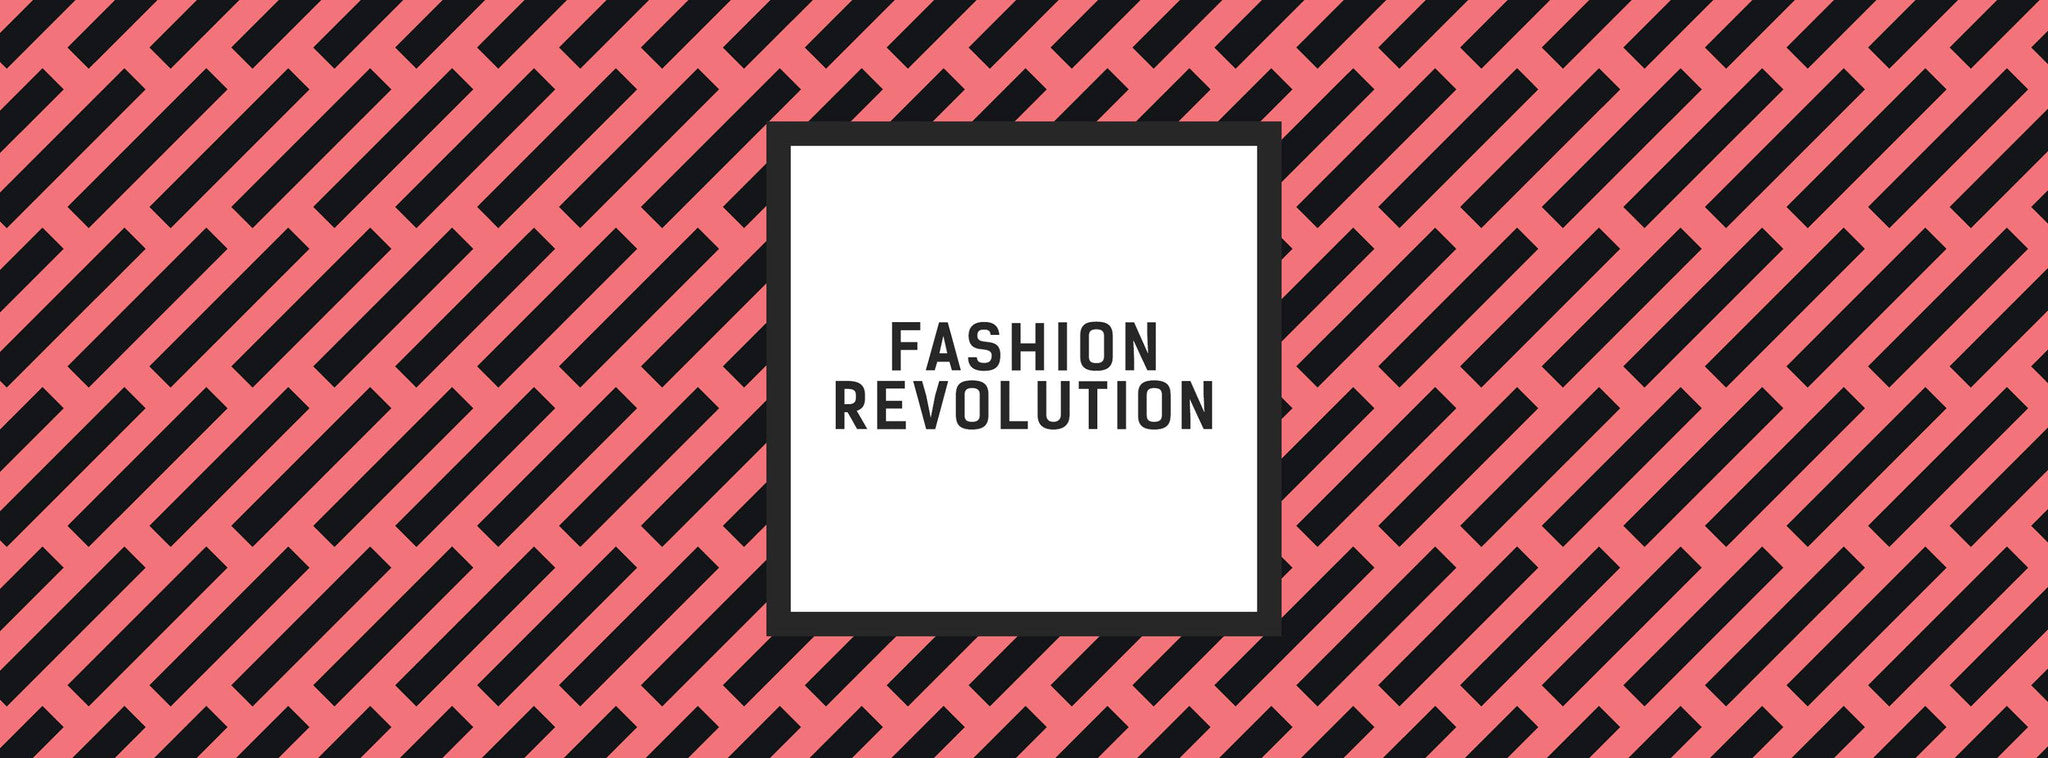 What is Fashion Revolution?